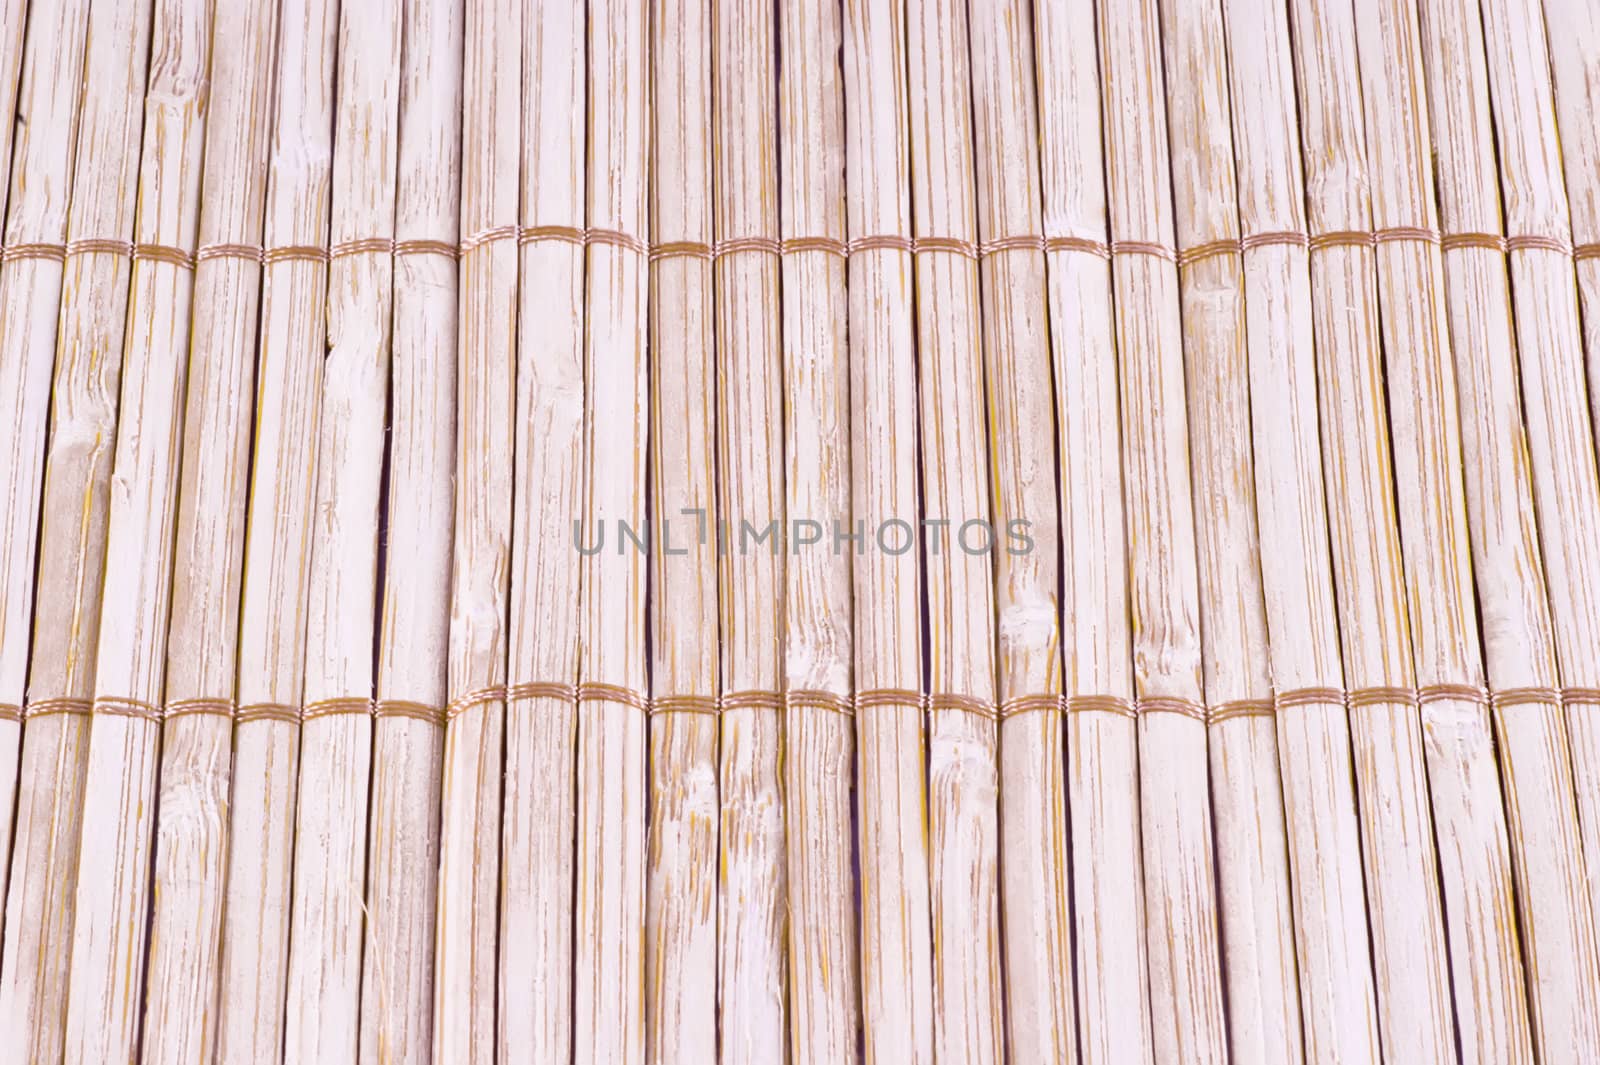 Bamboo background.